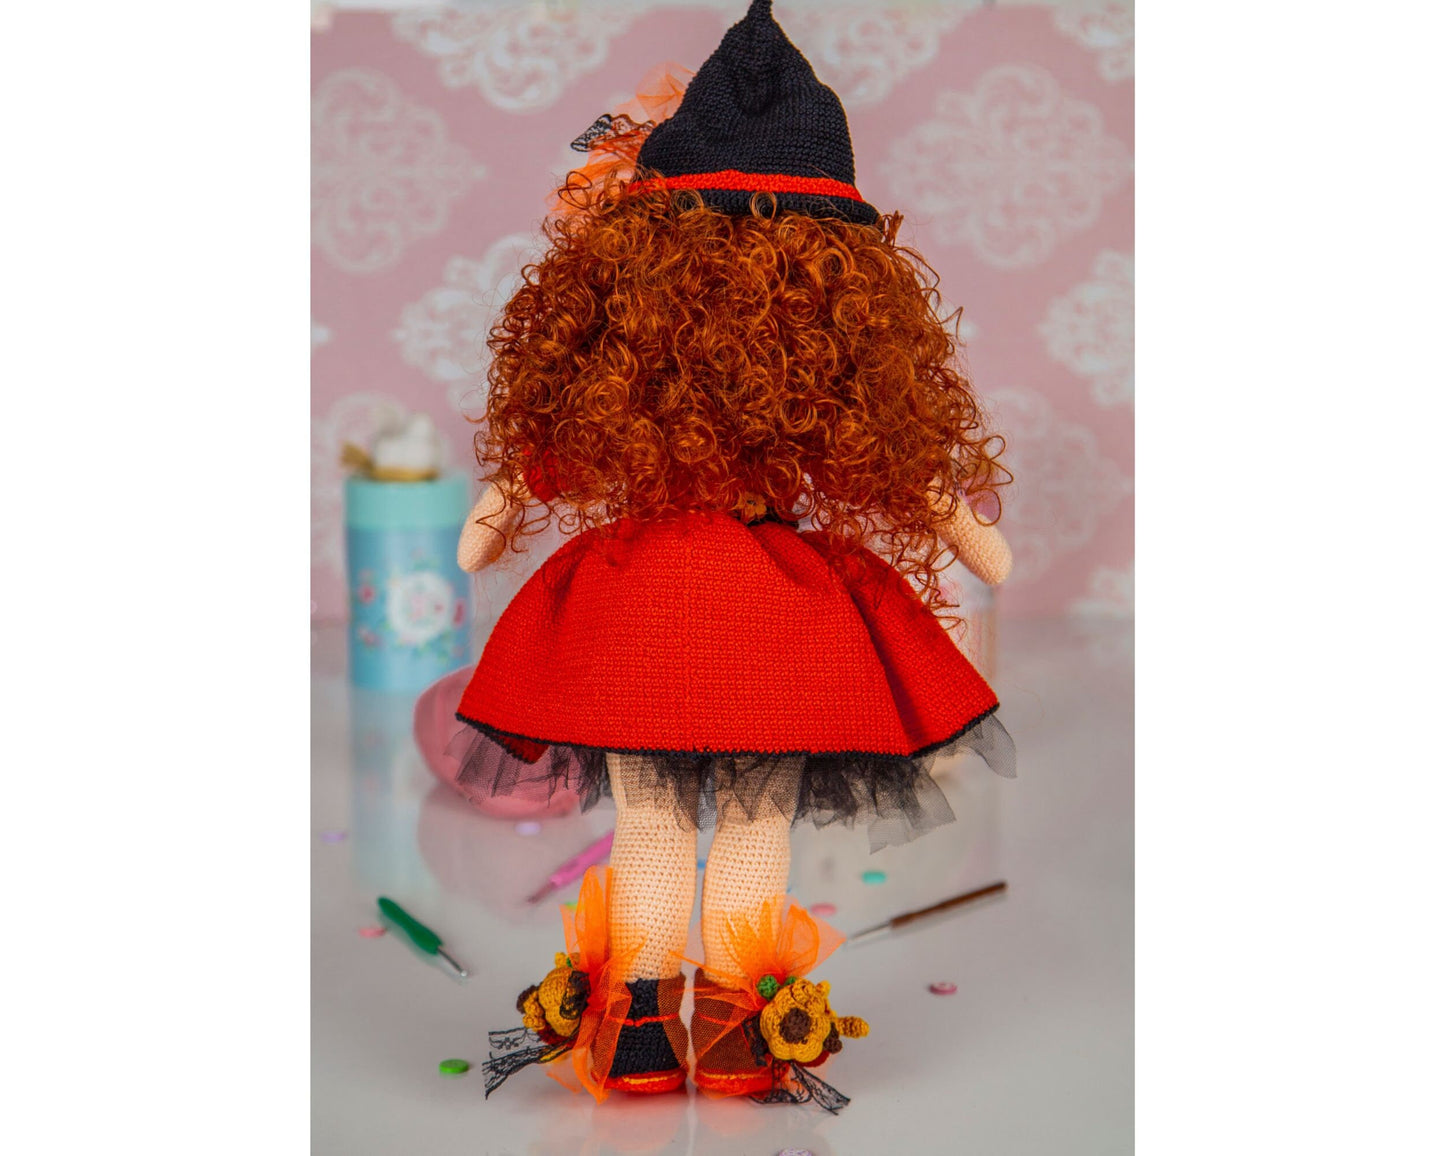 Redhead Amigurumi Doll, Cute Handmade Crochet Doll, Halloween Gift for Daughter